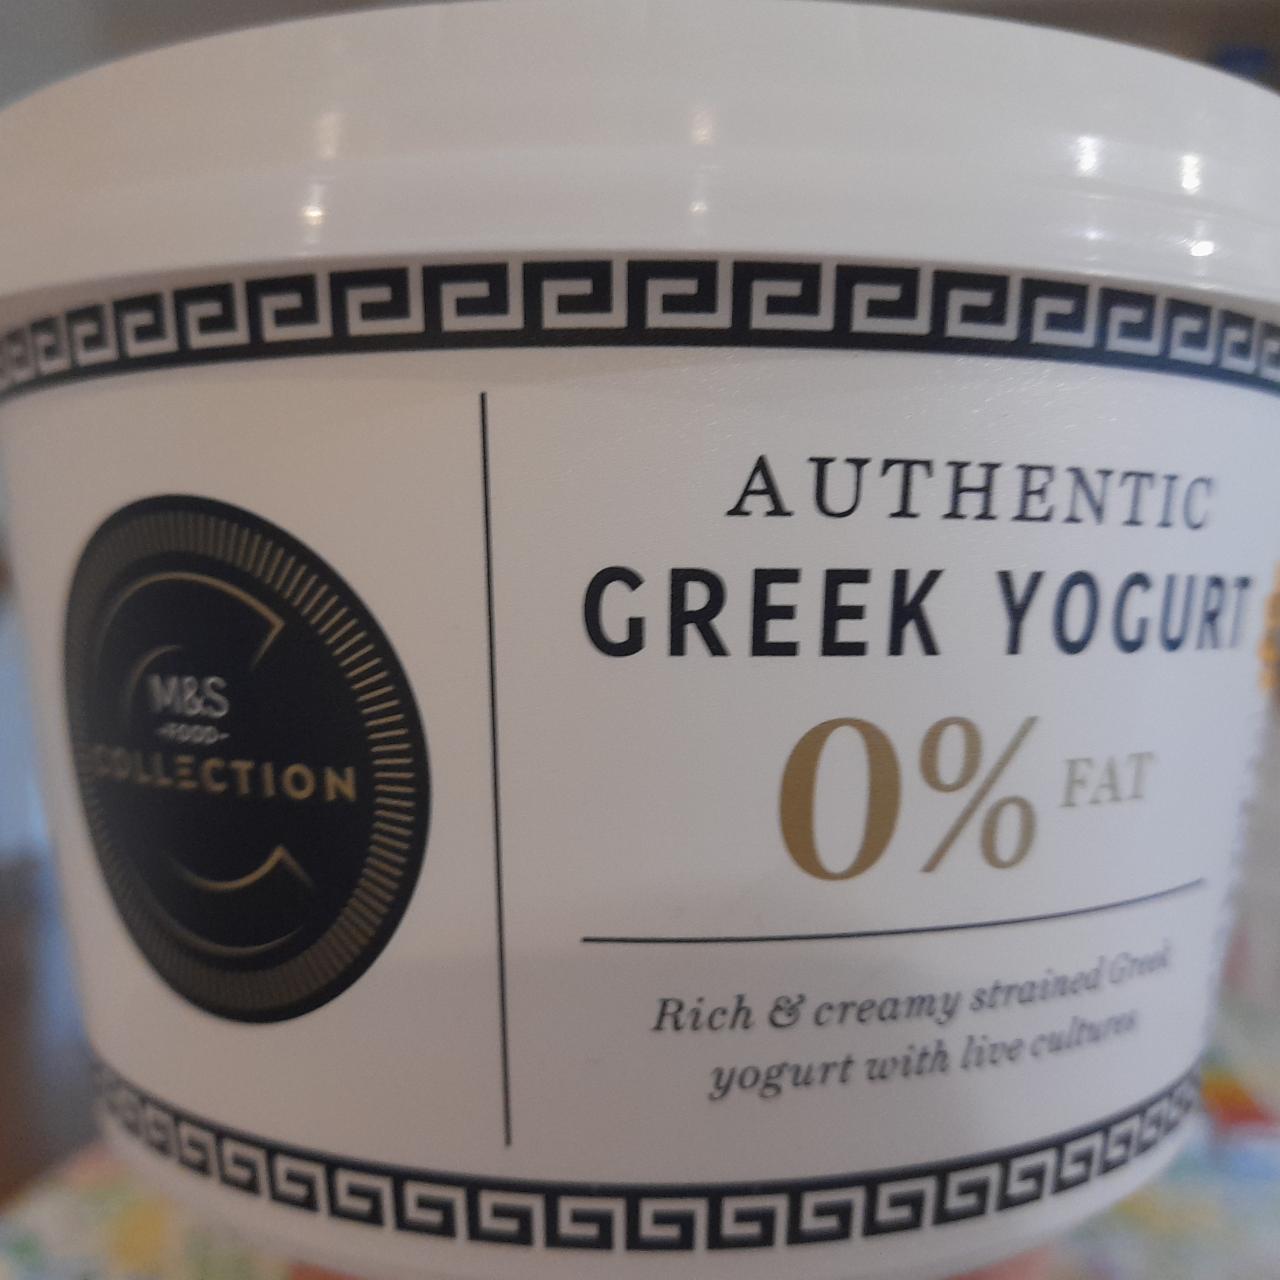 Fotografie - Authentic greek yogurt 0% fat M&S Food